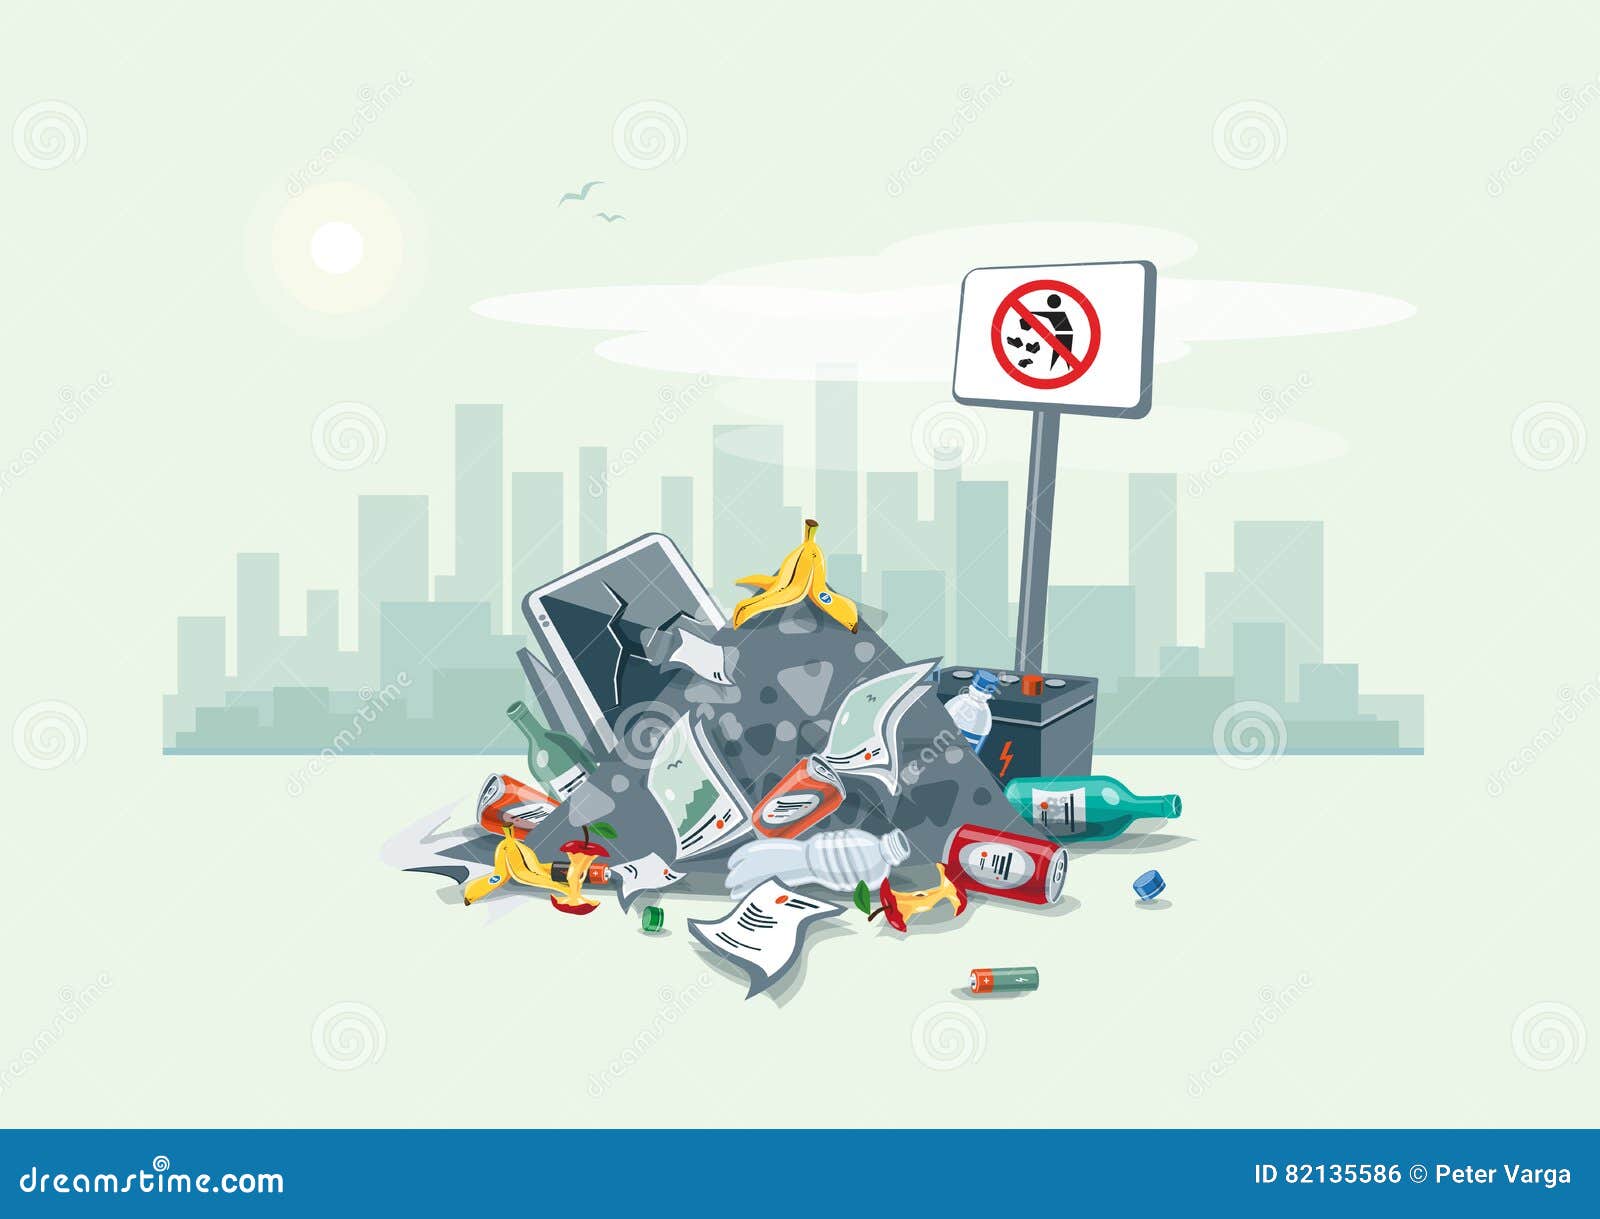 littering-garbage-trash-stack-street-road-vector-illustration-waste-pile-have-been-disposed-improperly-82135586.jpg